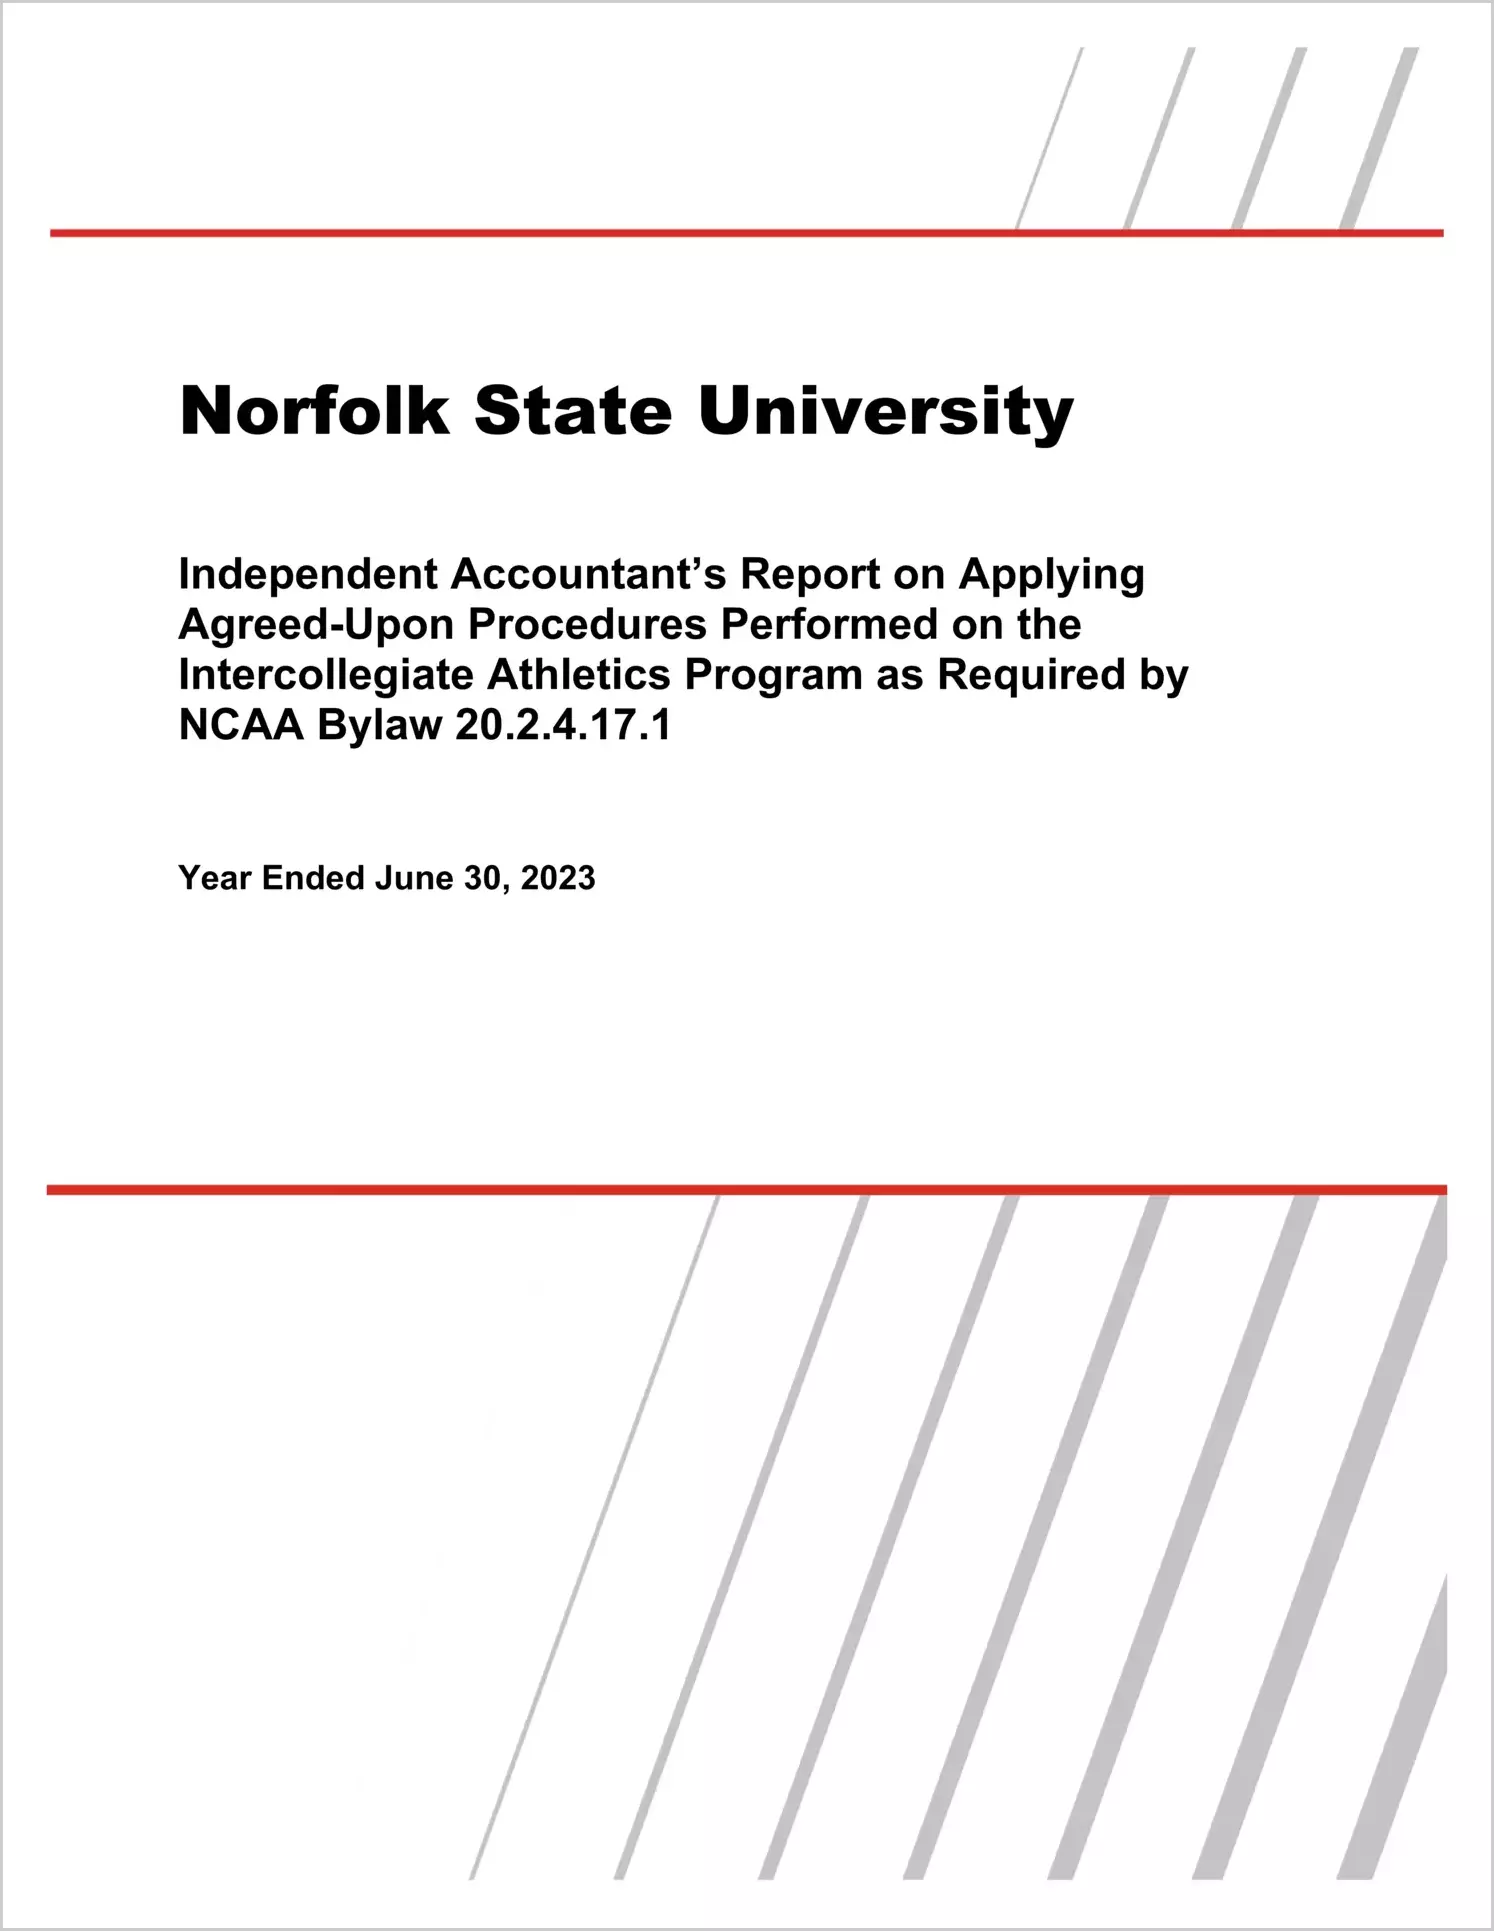 Norfolk State University Intercollegiate Athletics Programs for the year ended June 30, 2023